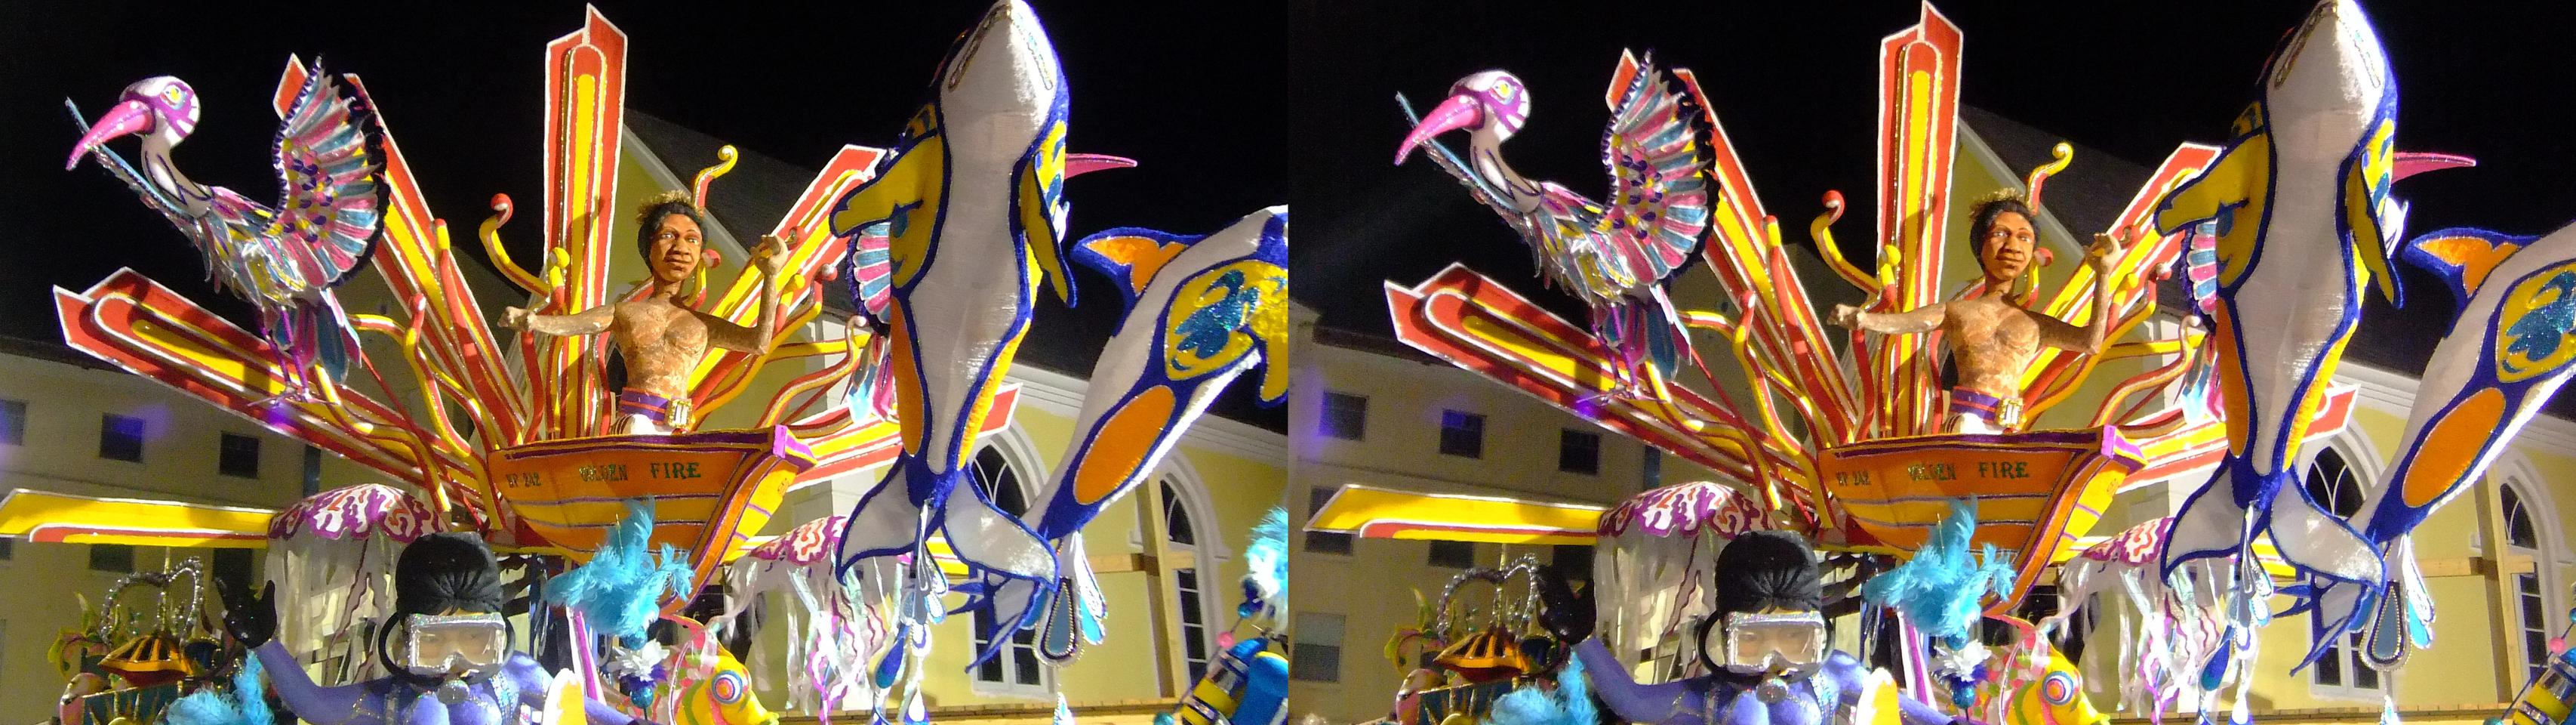 New Year's Eve parade, Nassau, Bahamas